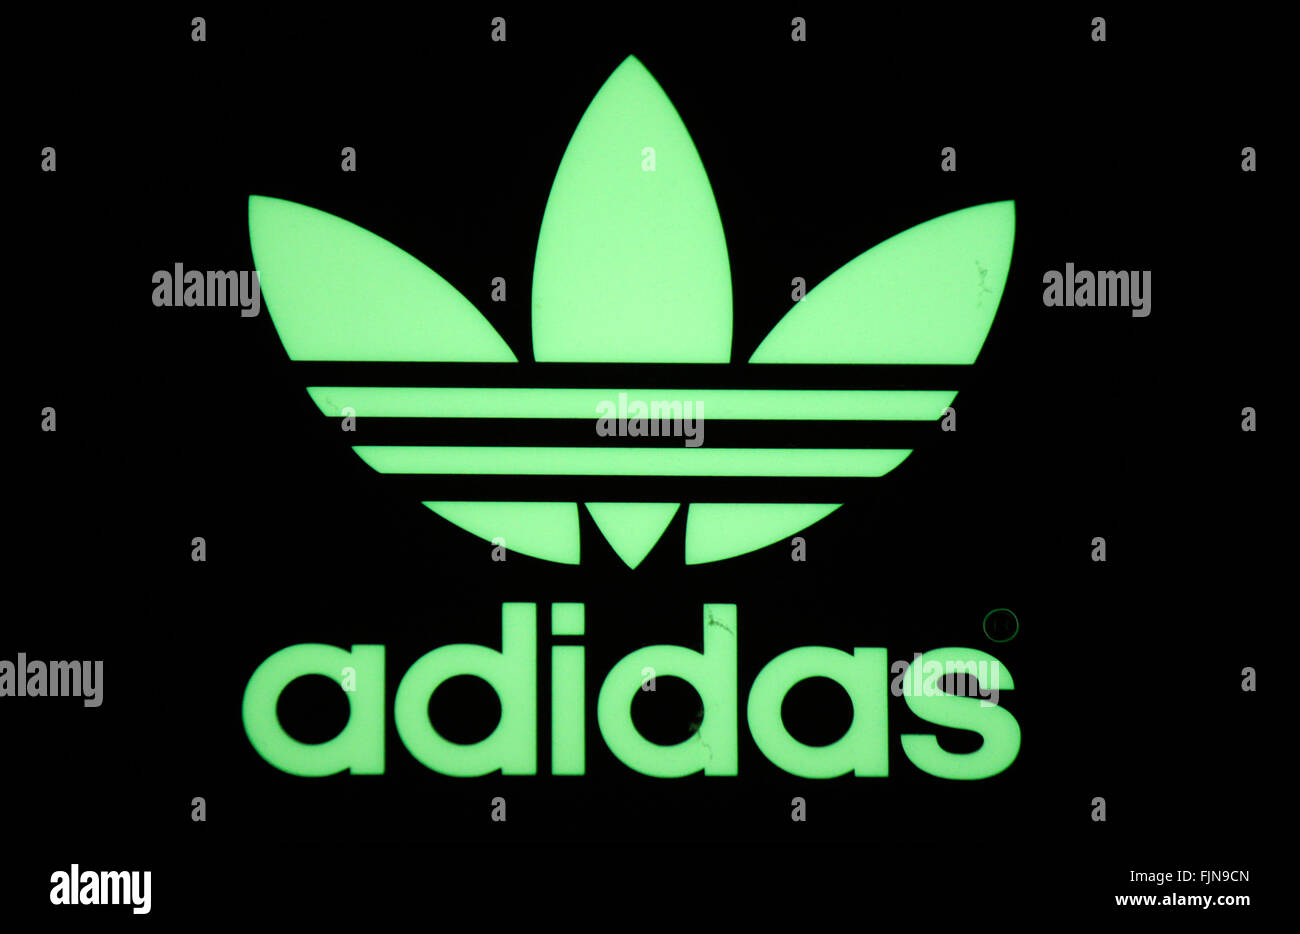 adidas logo high resolution